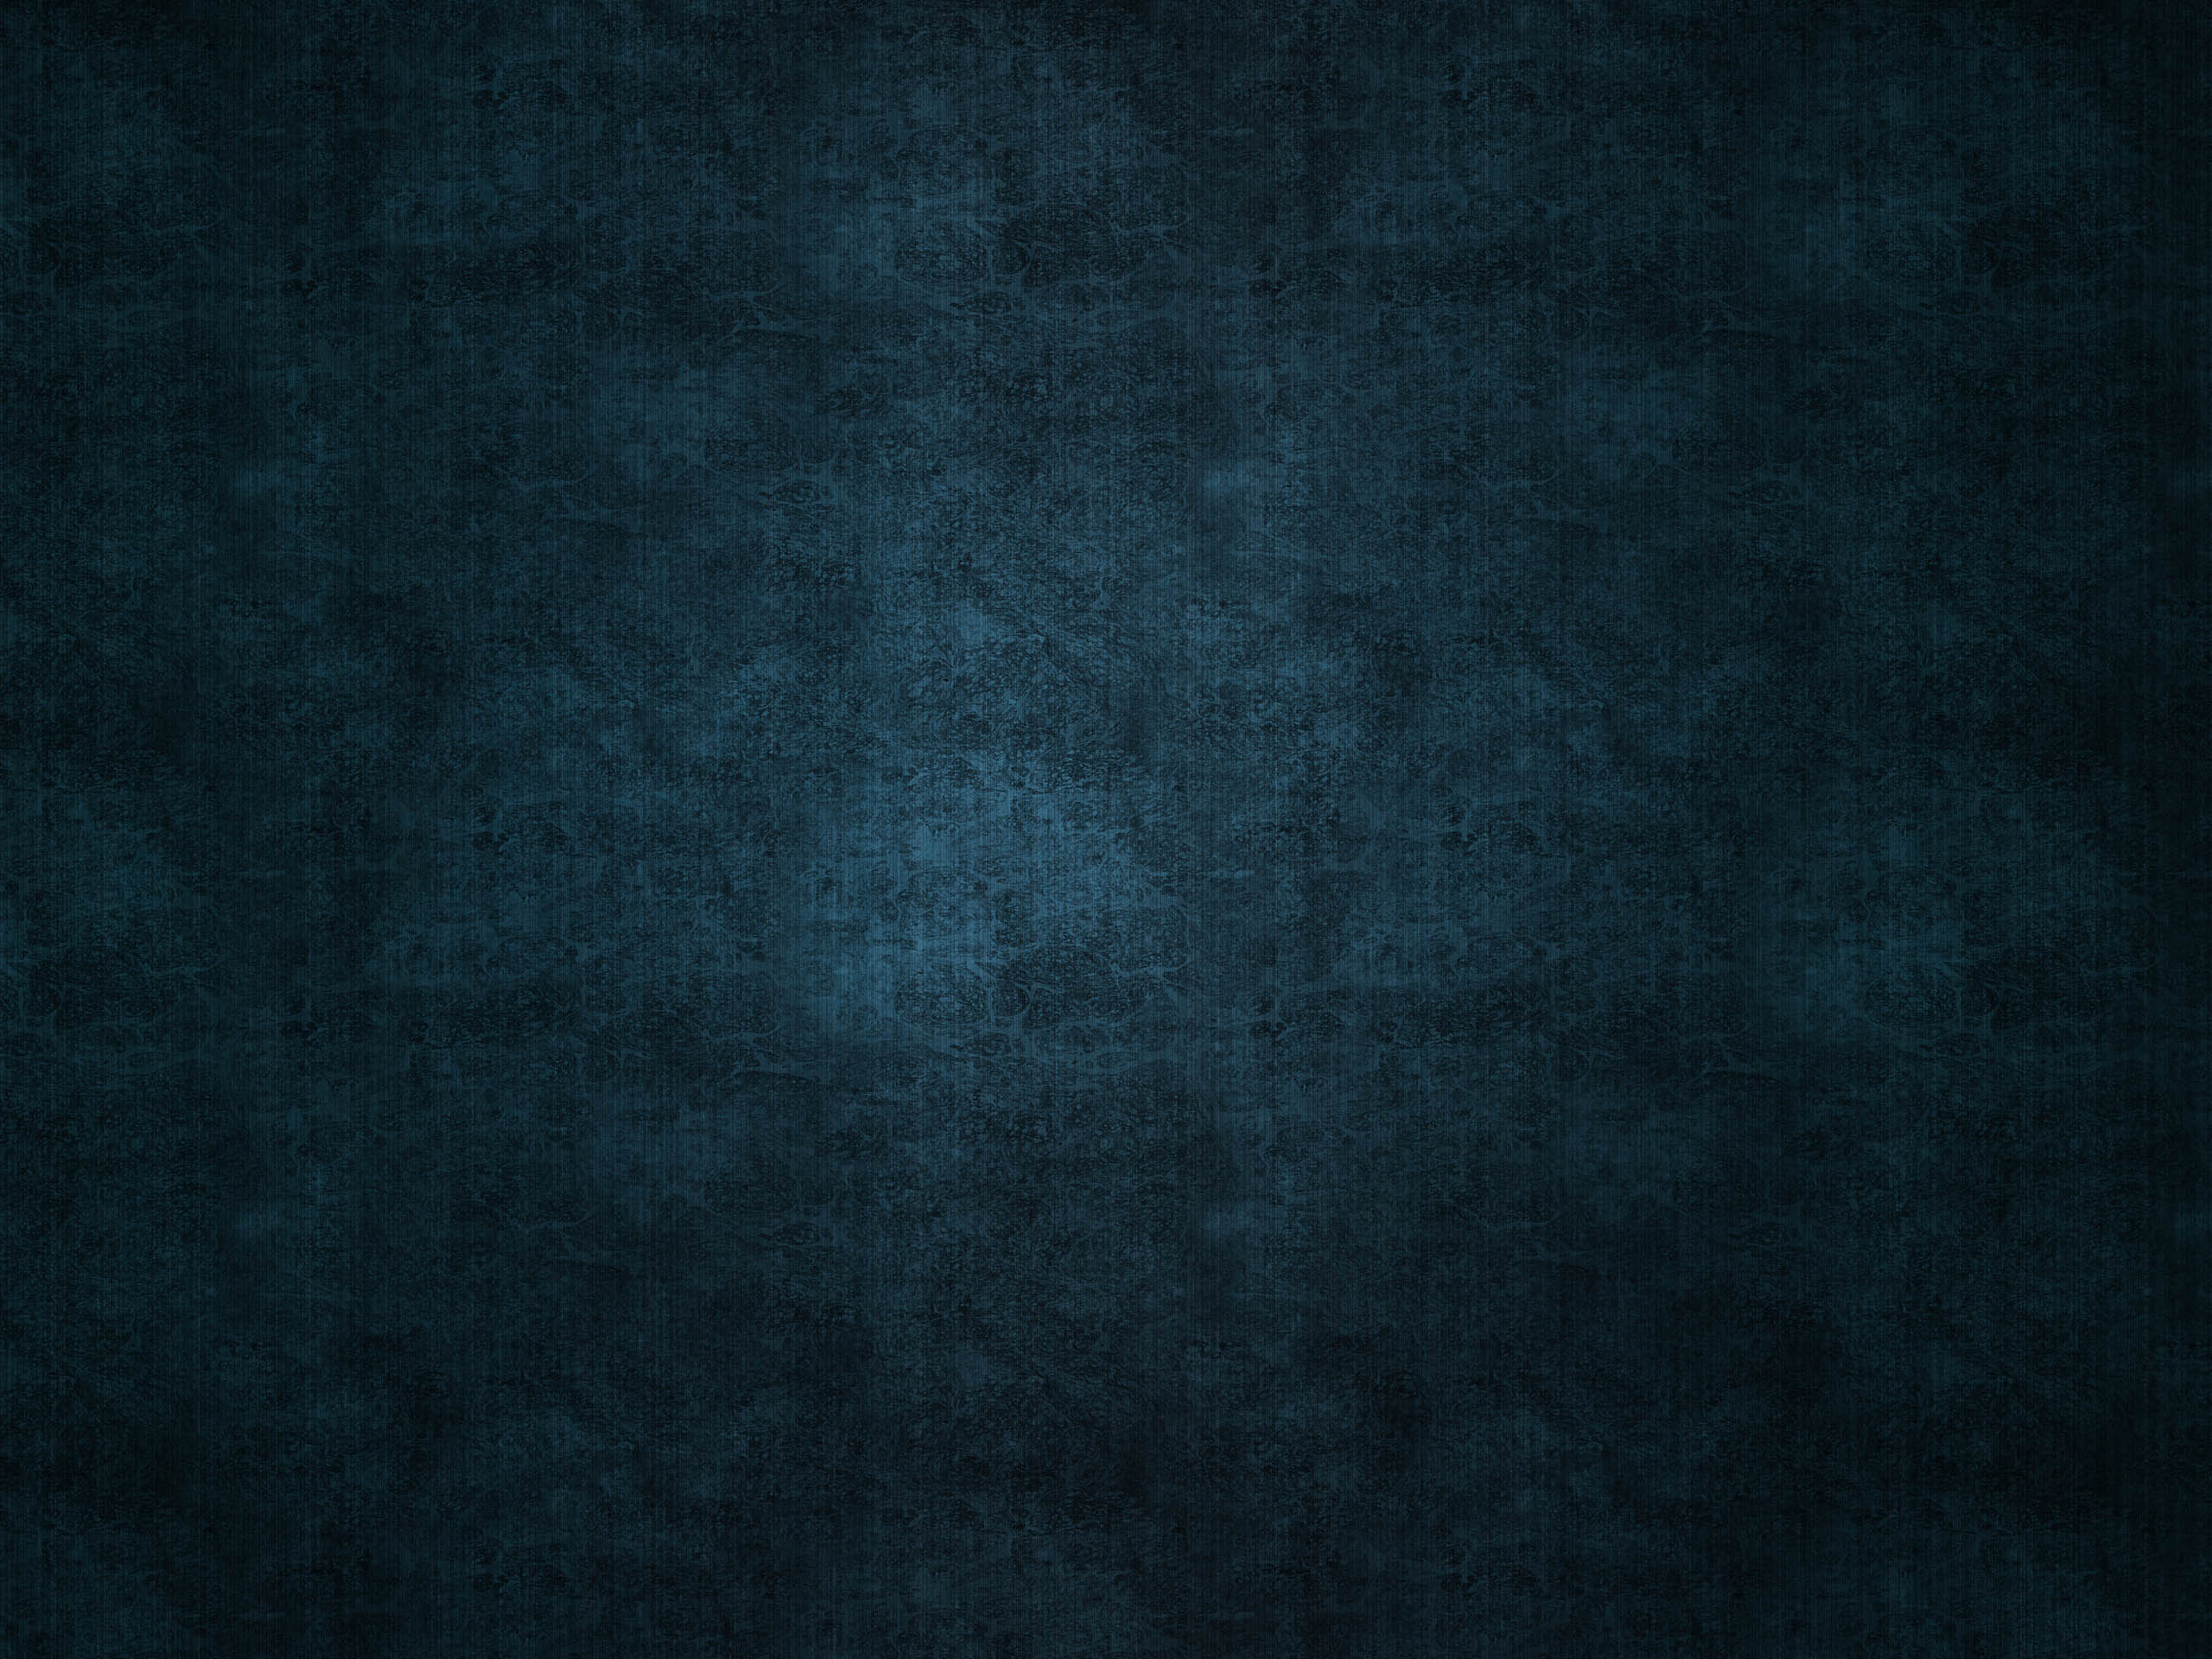 grungy blue texture by waitq on DeviantArt